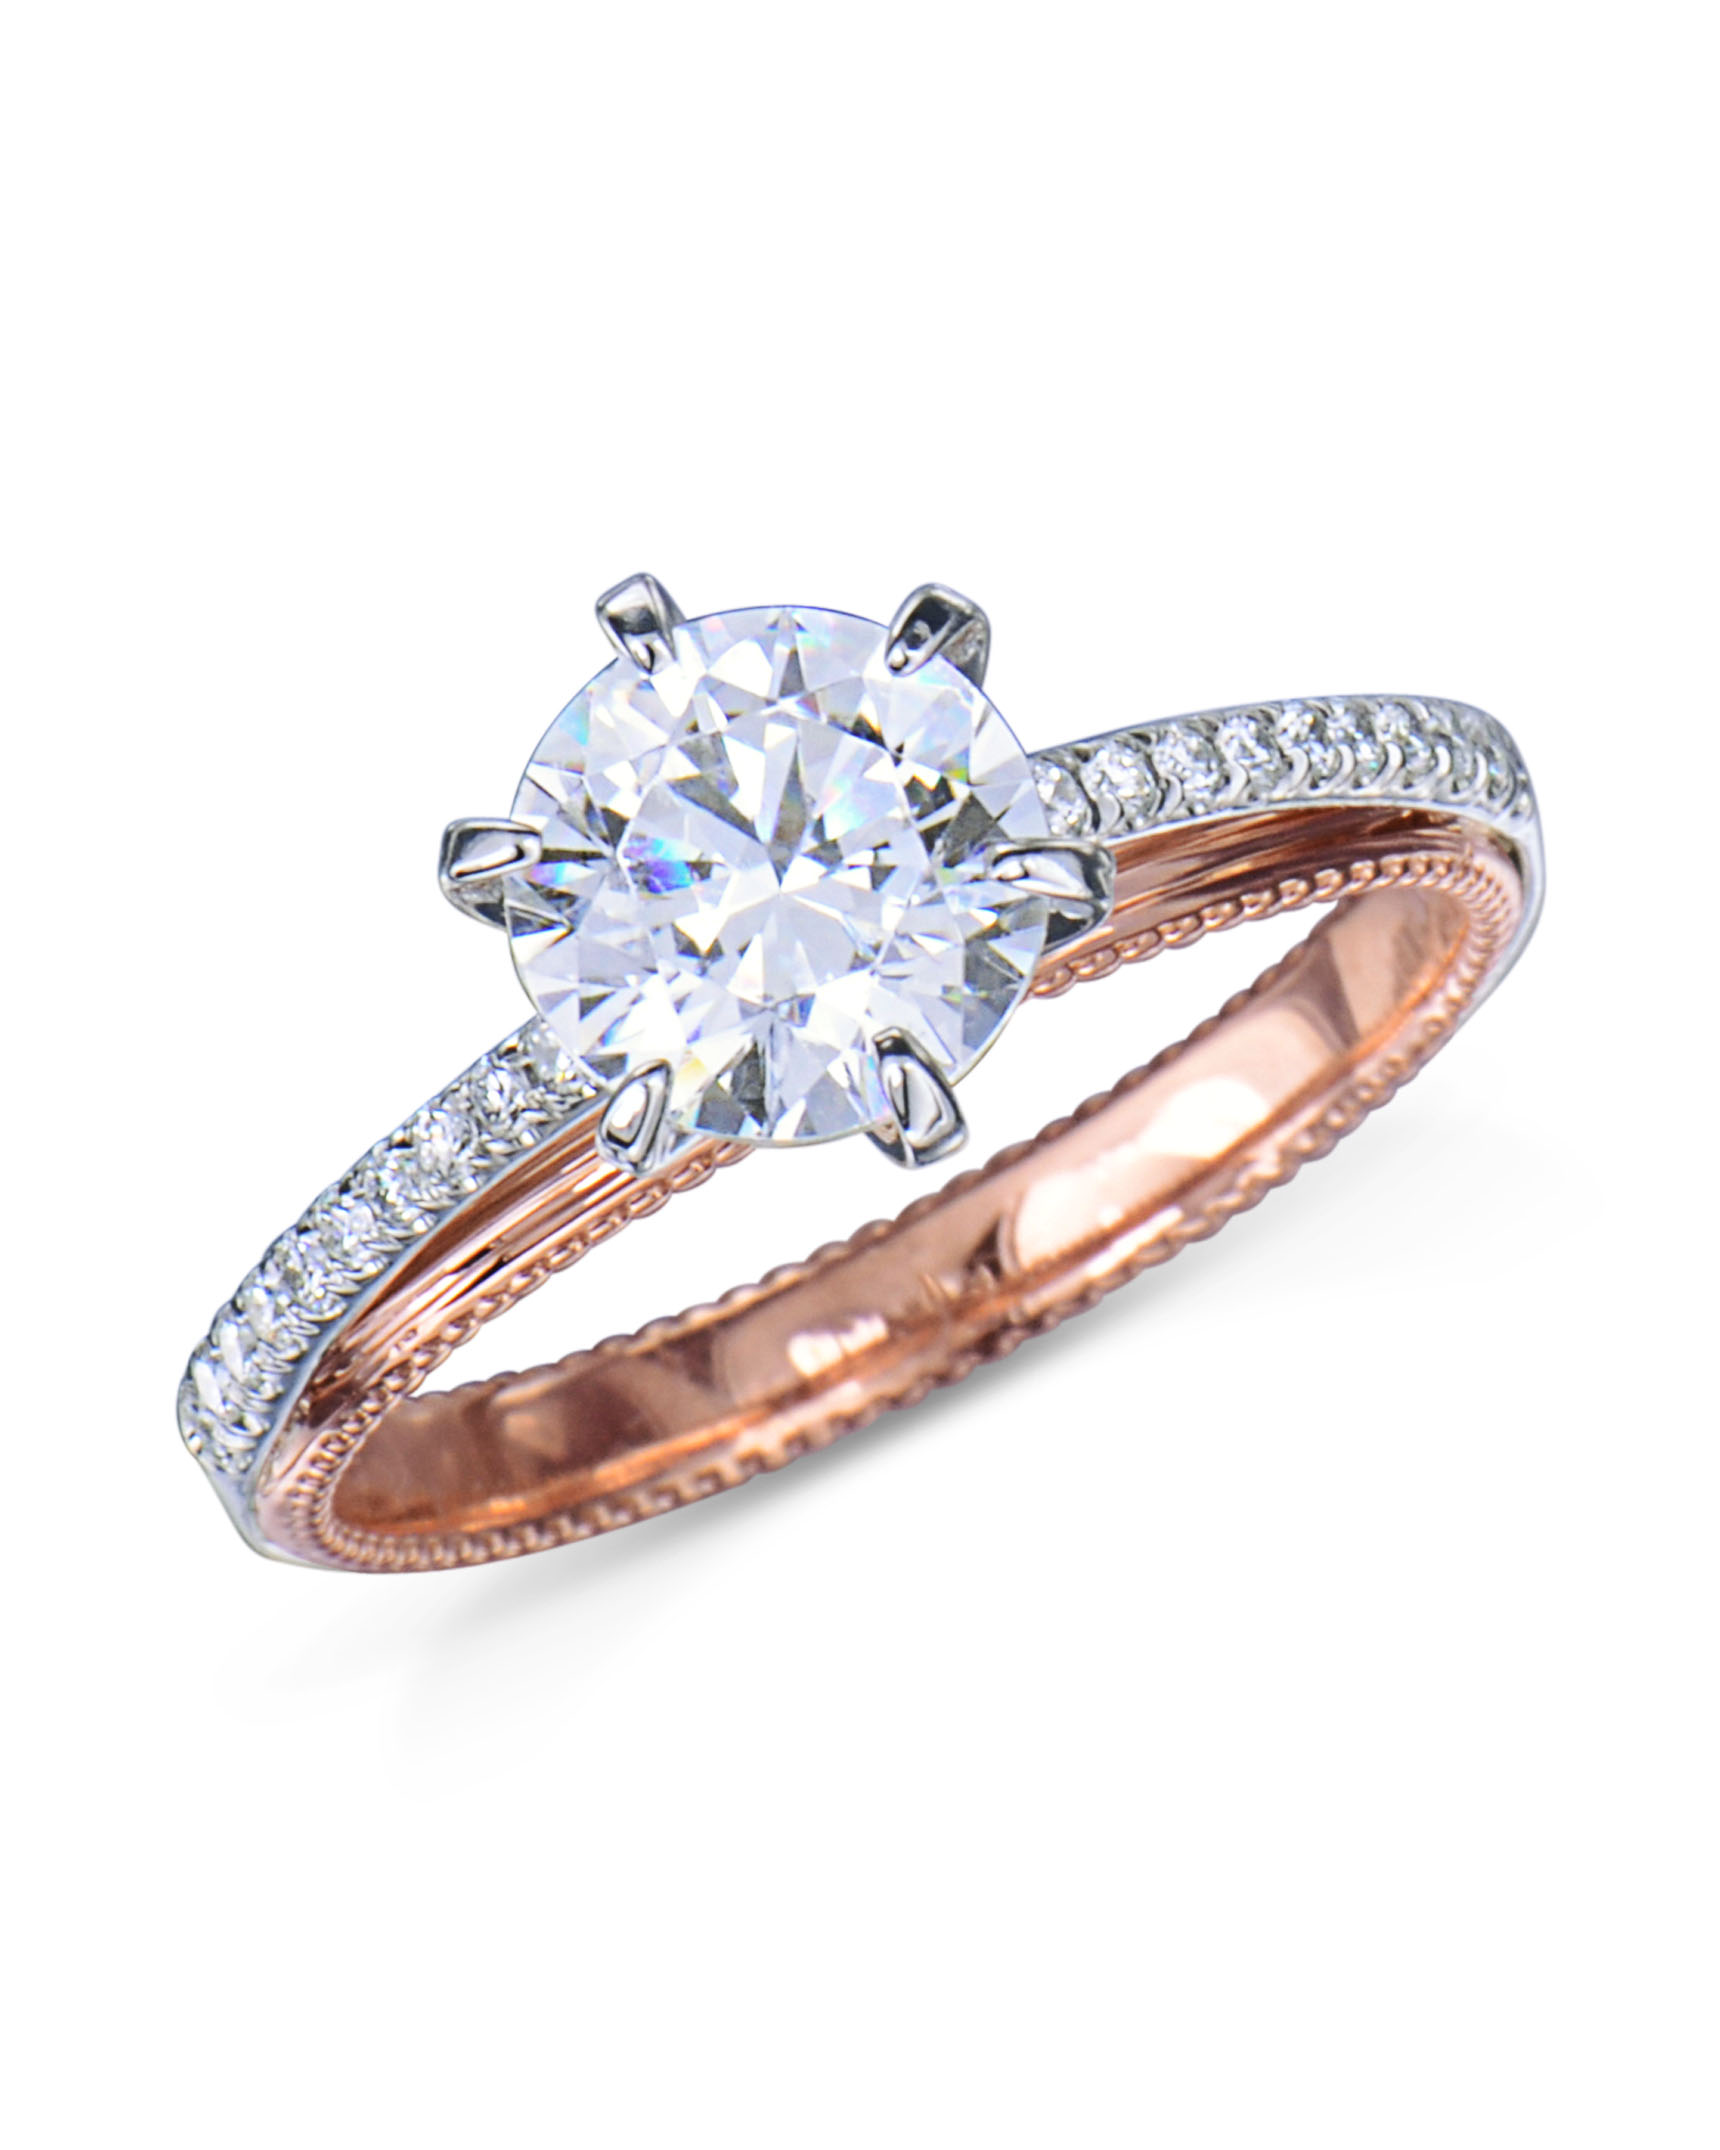  Rose  Gold  and Platinum  Diamond Engagement  Ring  Turgeon Raine